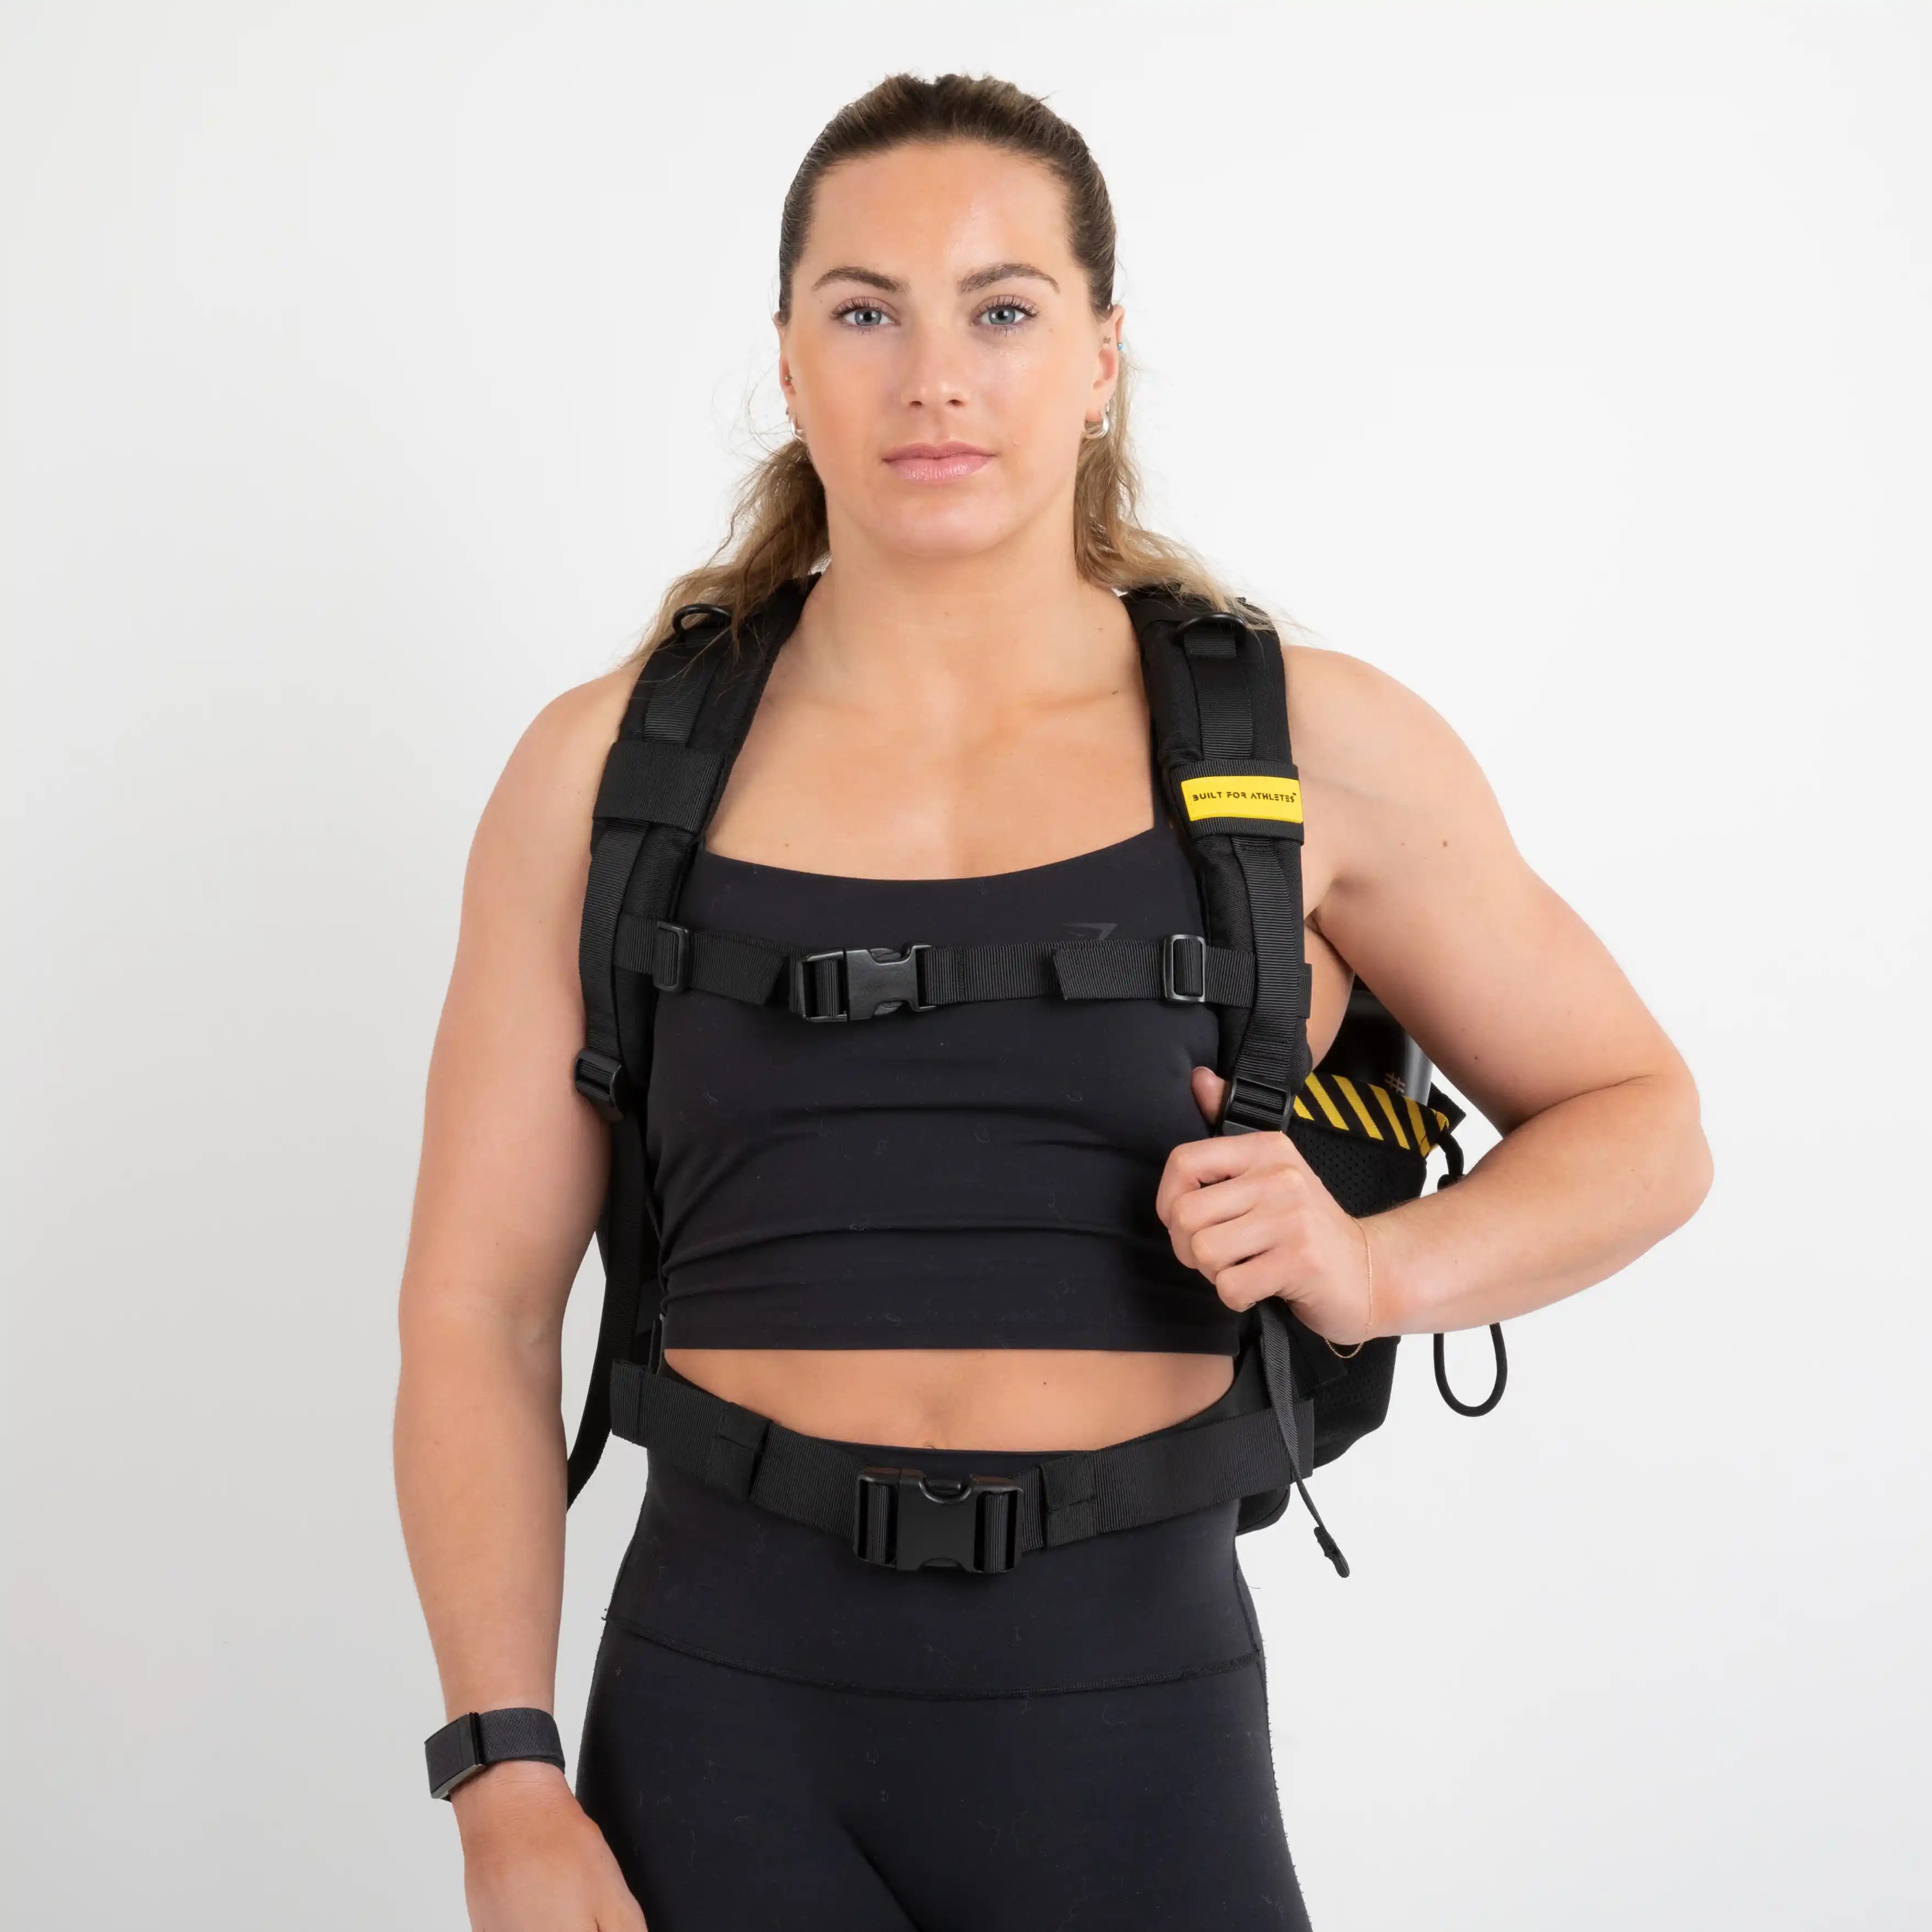 Built for Athletes Backpacks Large Black & Yellow Gym Backpack (35L)